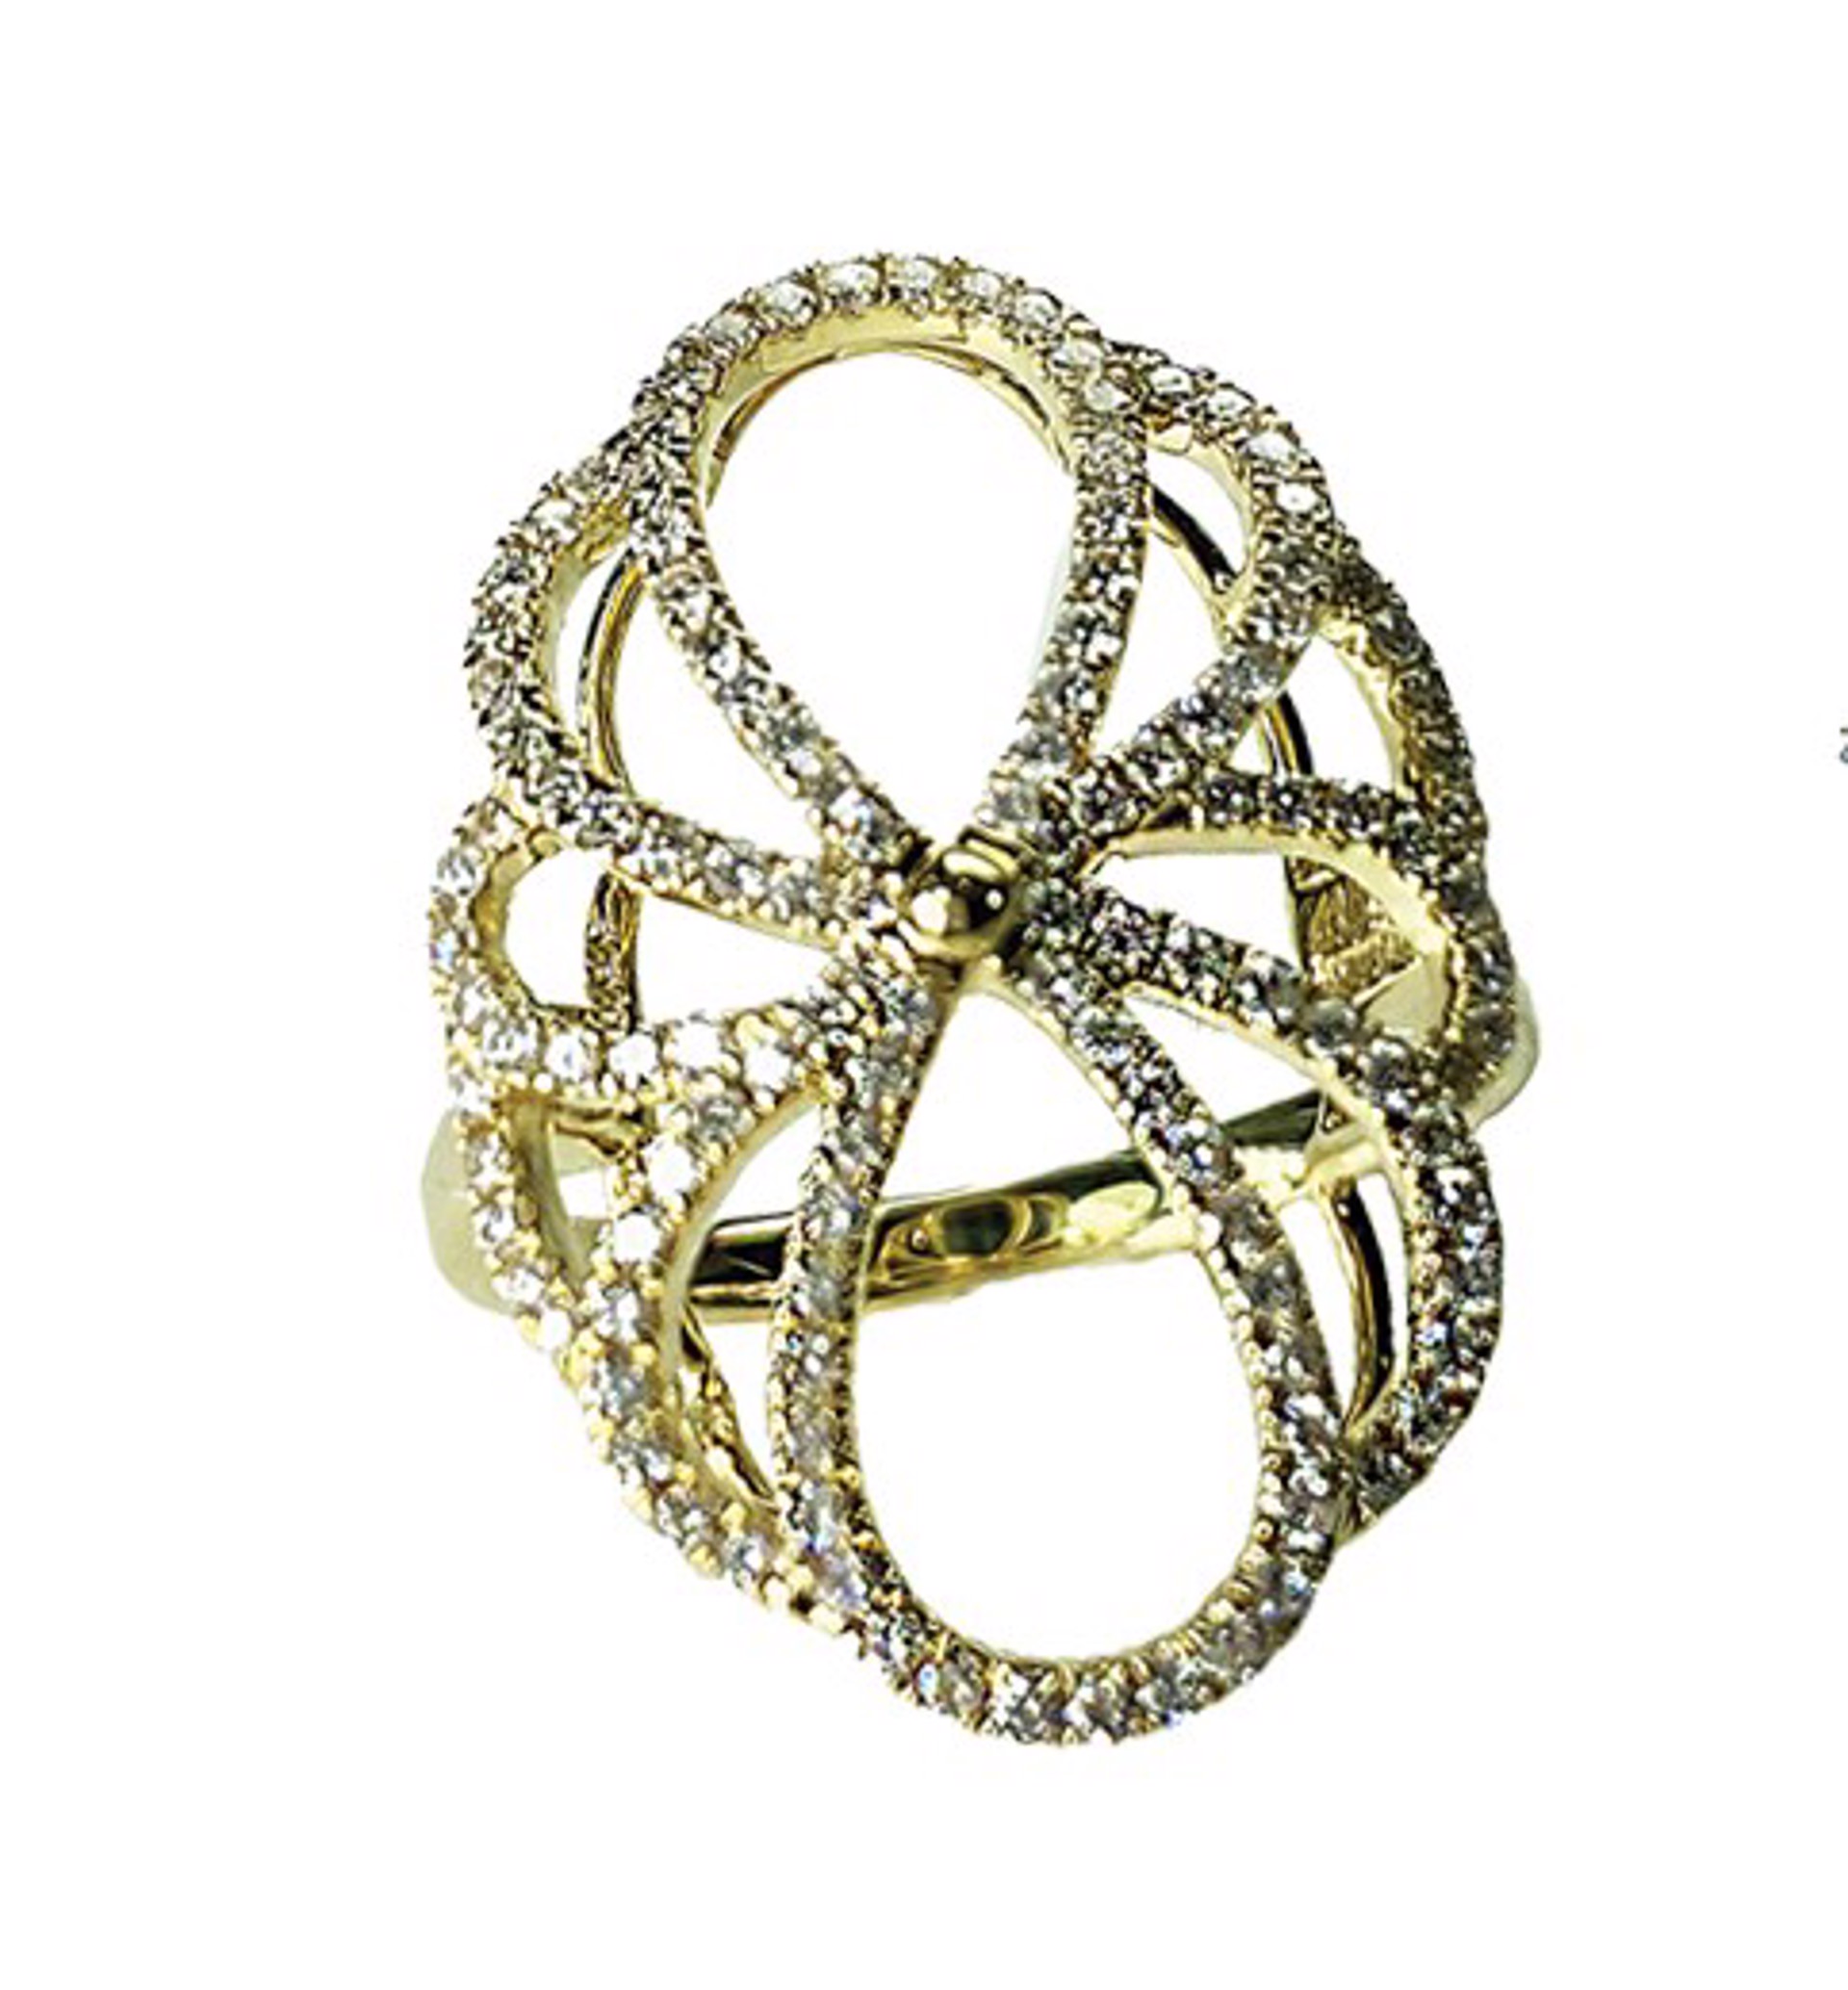 14k gold ring with diamonds .59ctw by Melinda Lawton Jewelry